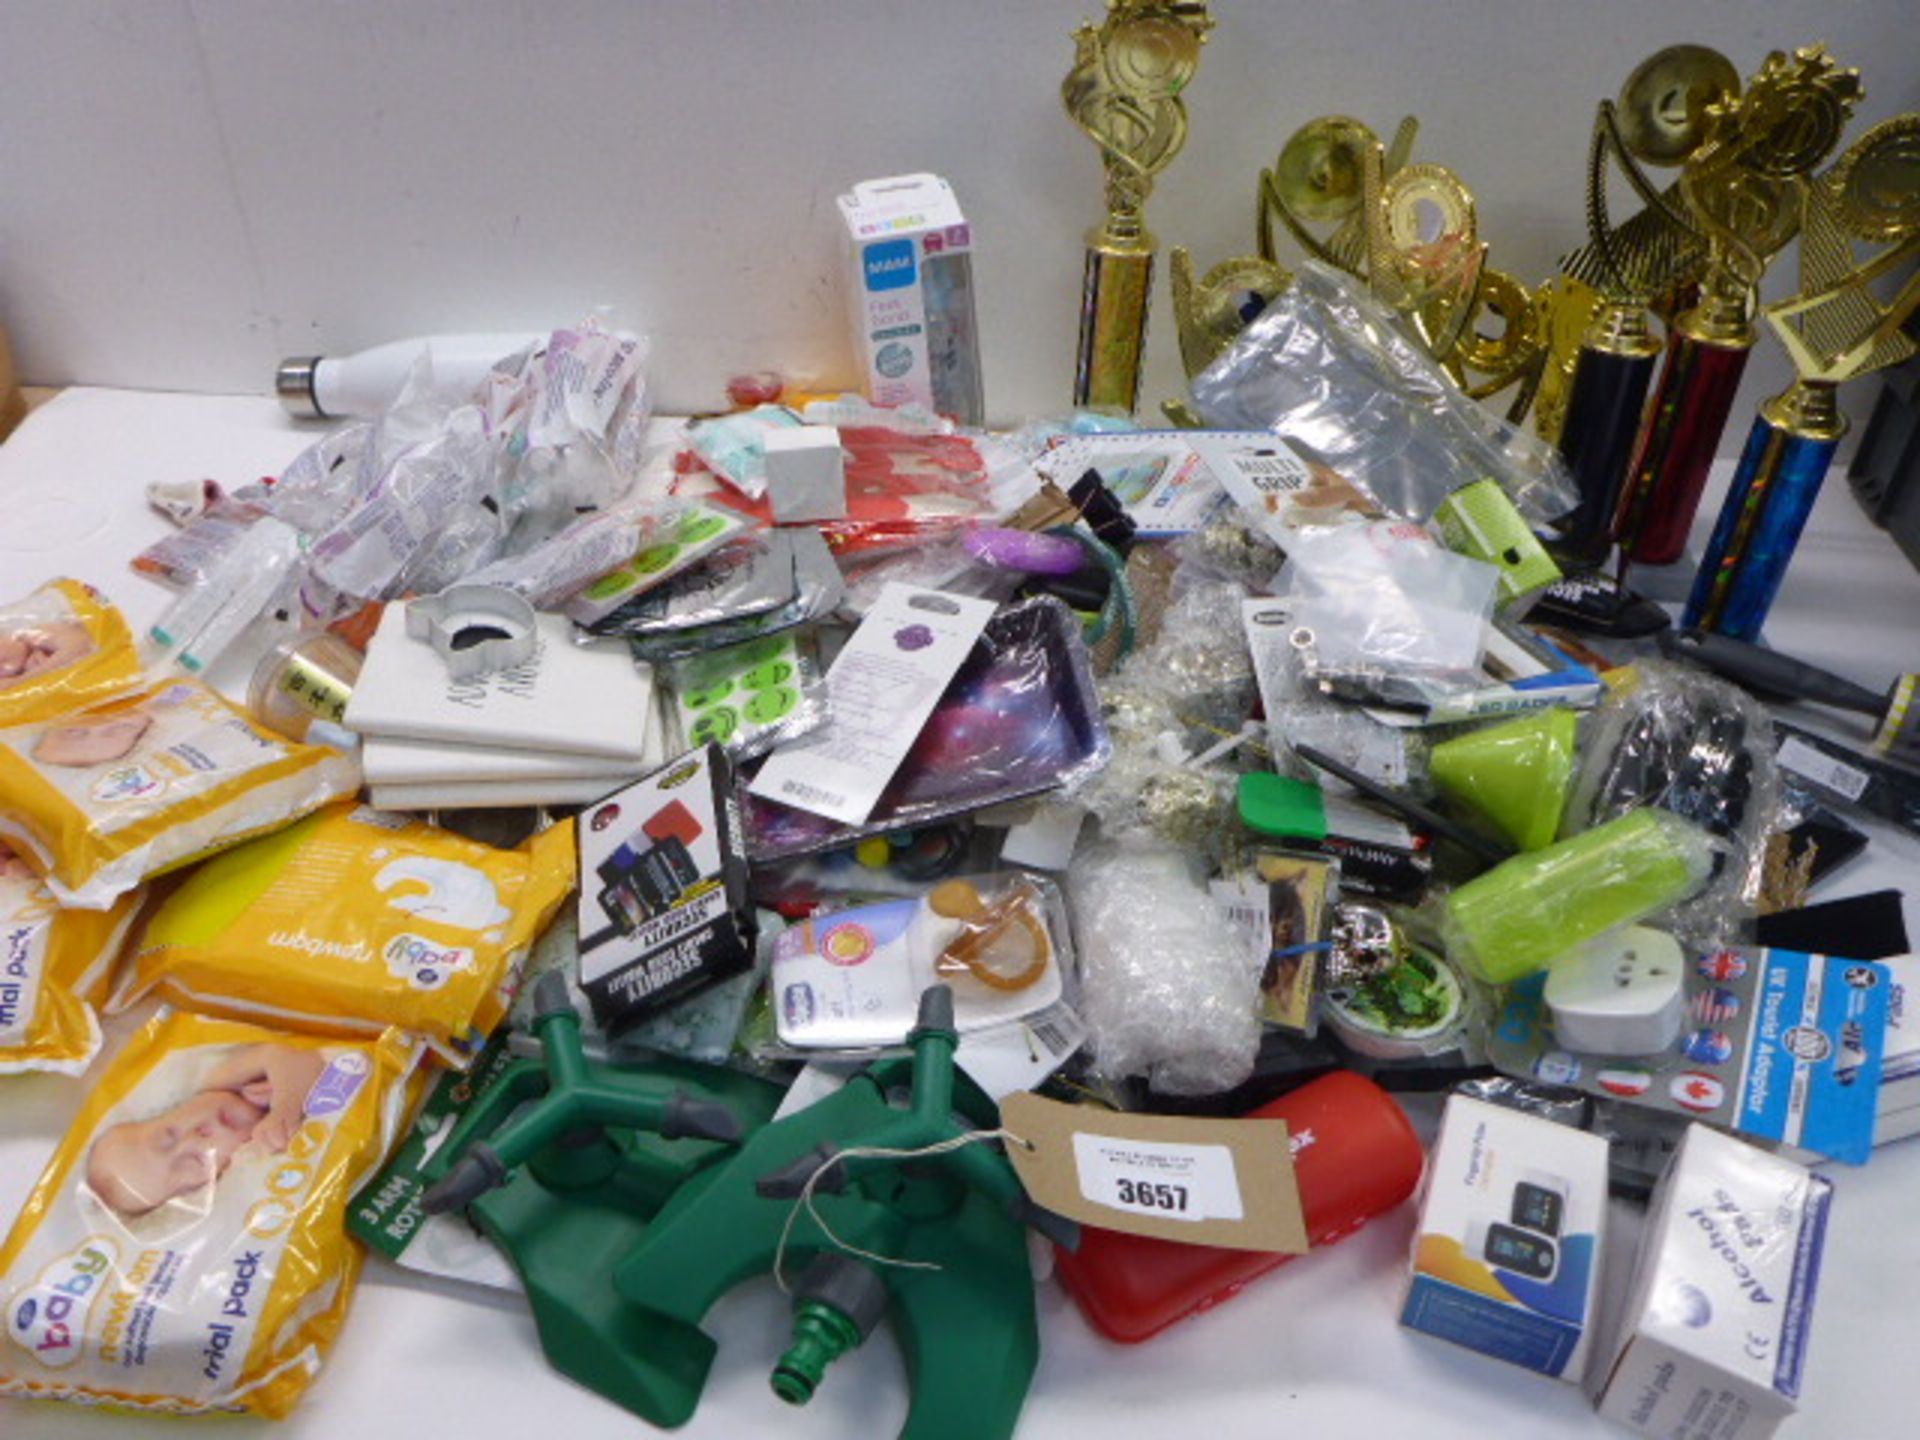 Large bag of household sundries, trophies, glue sticks, Venom extractor, Newborn nappies, garden